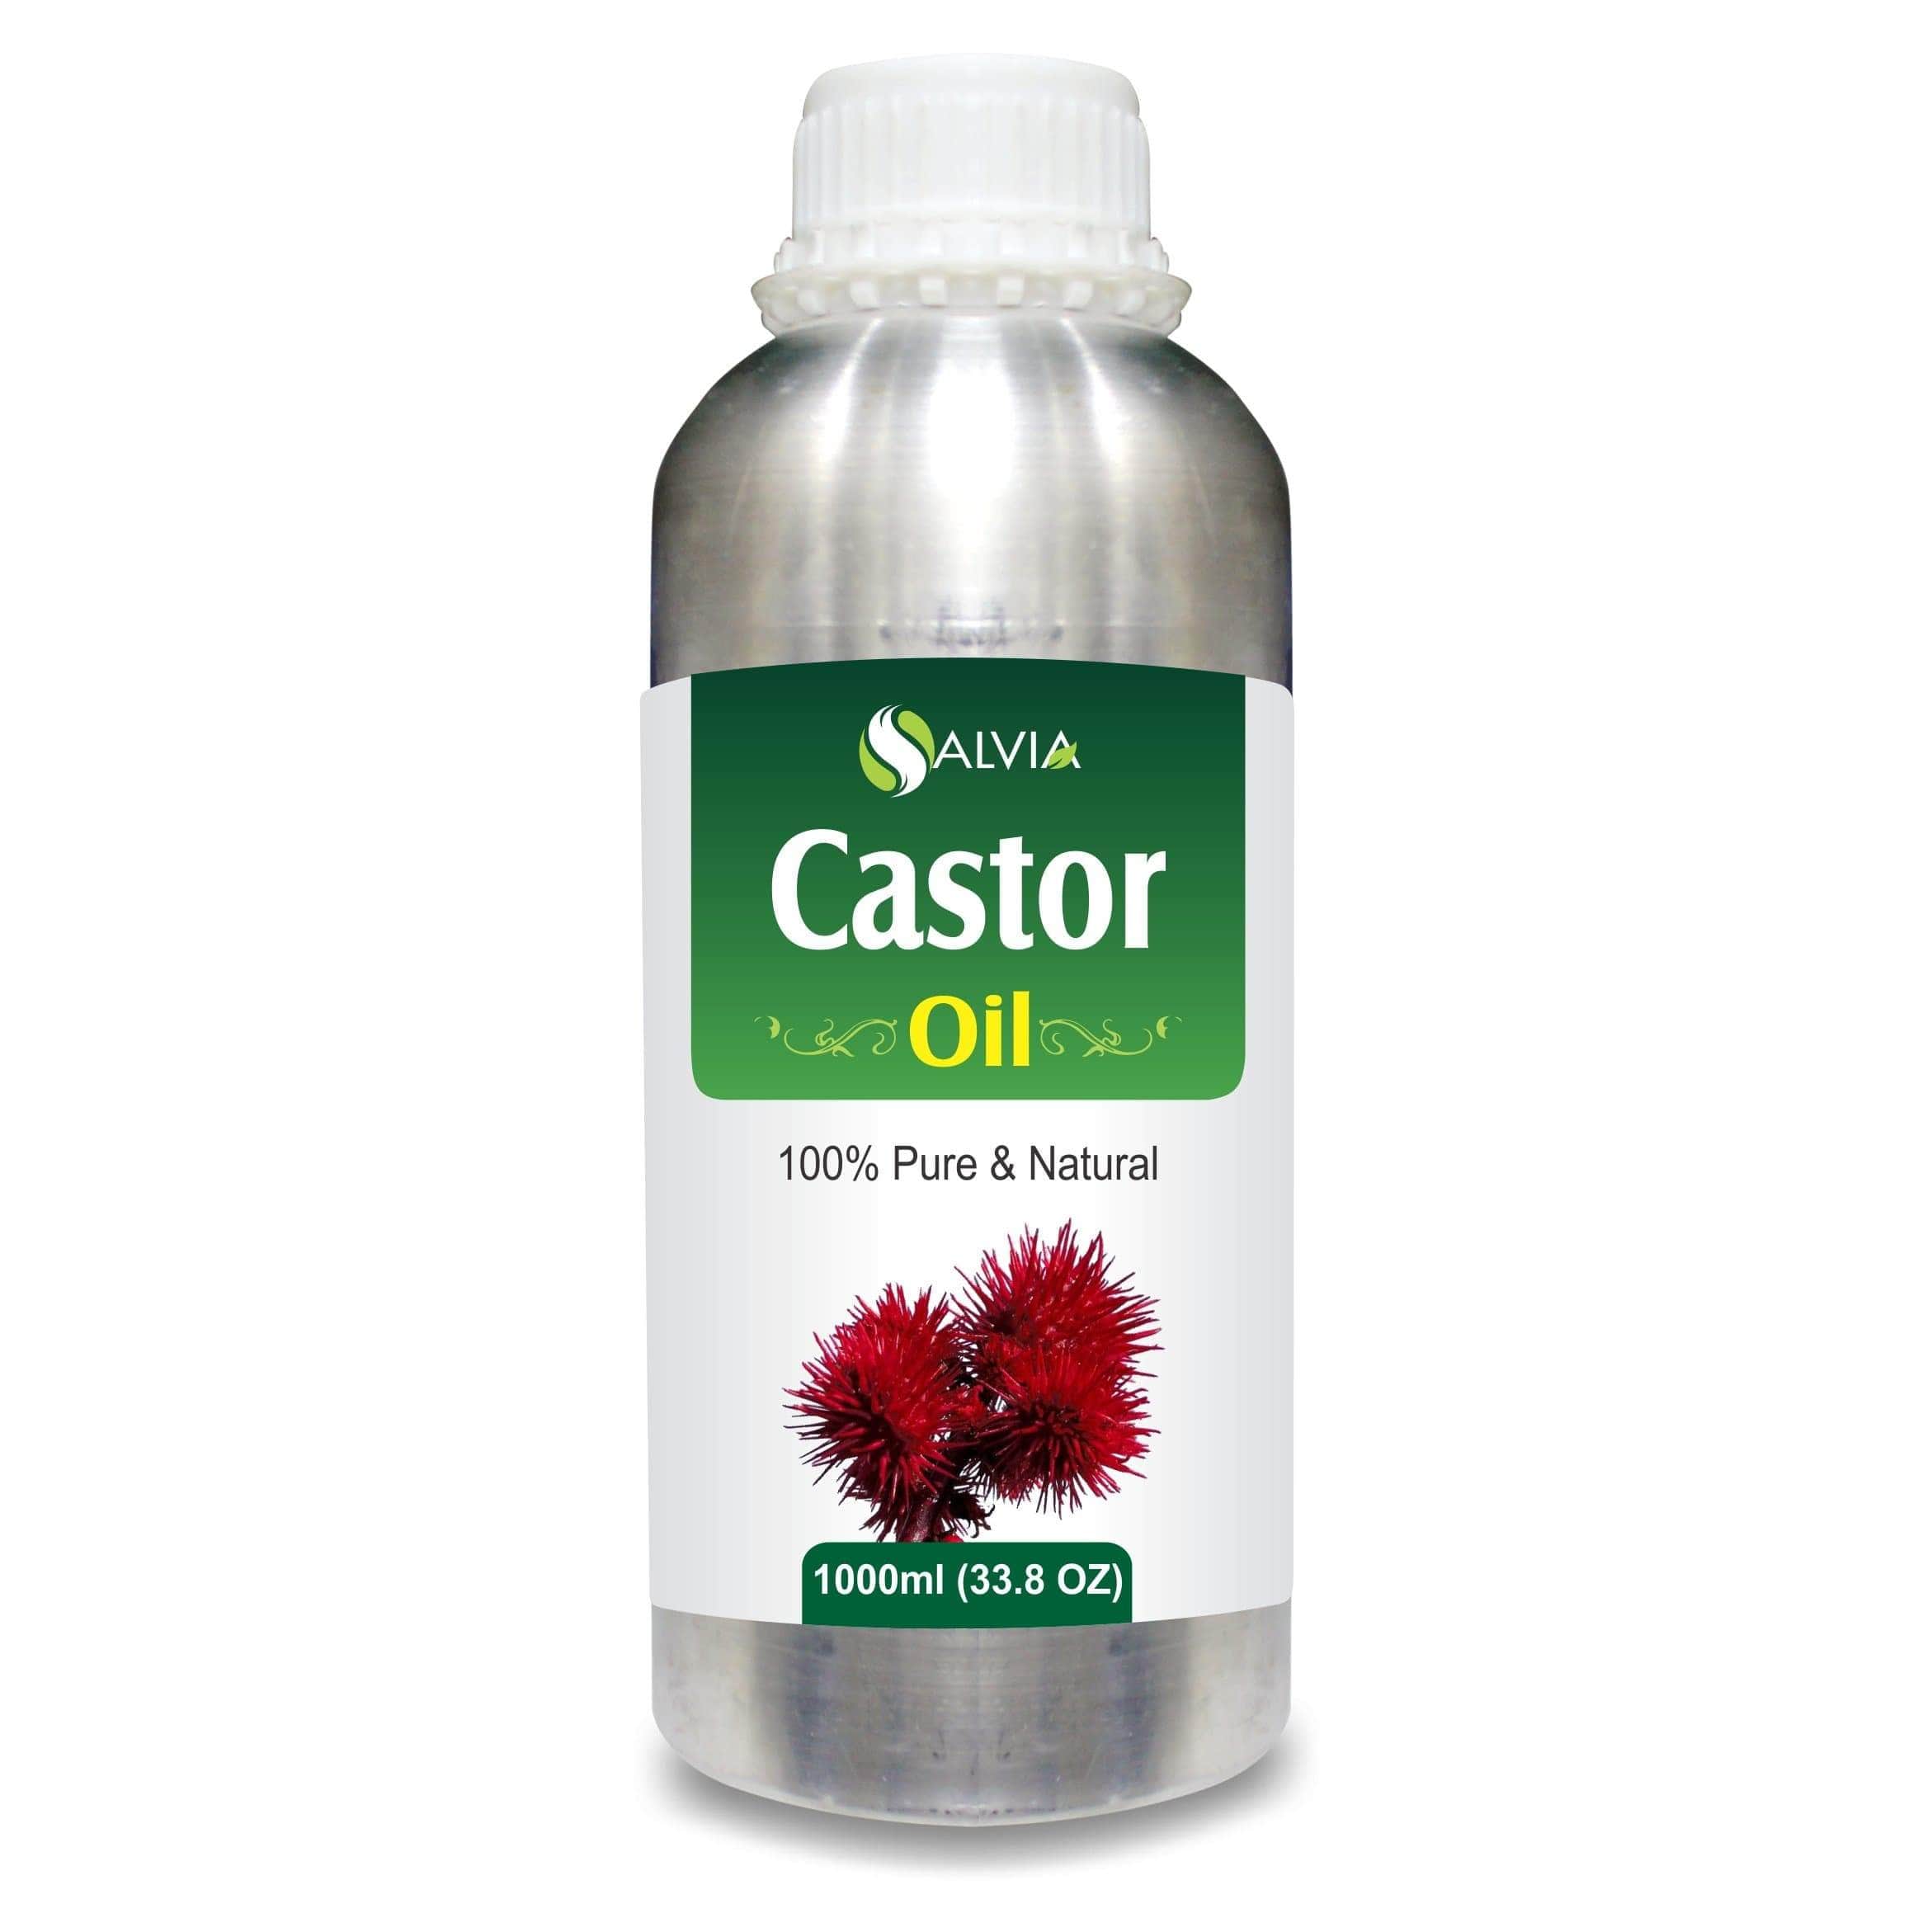 castor oil for face - Shoprythm